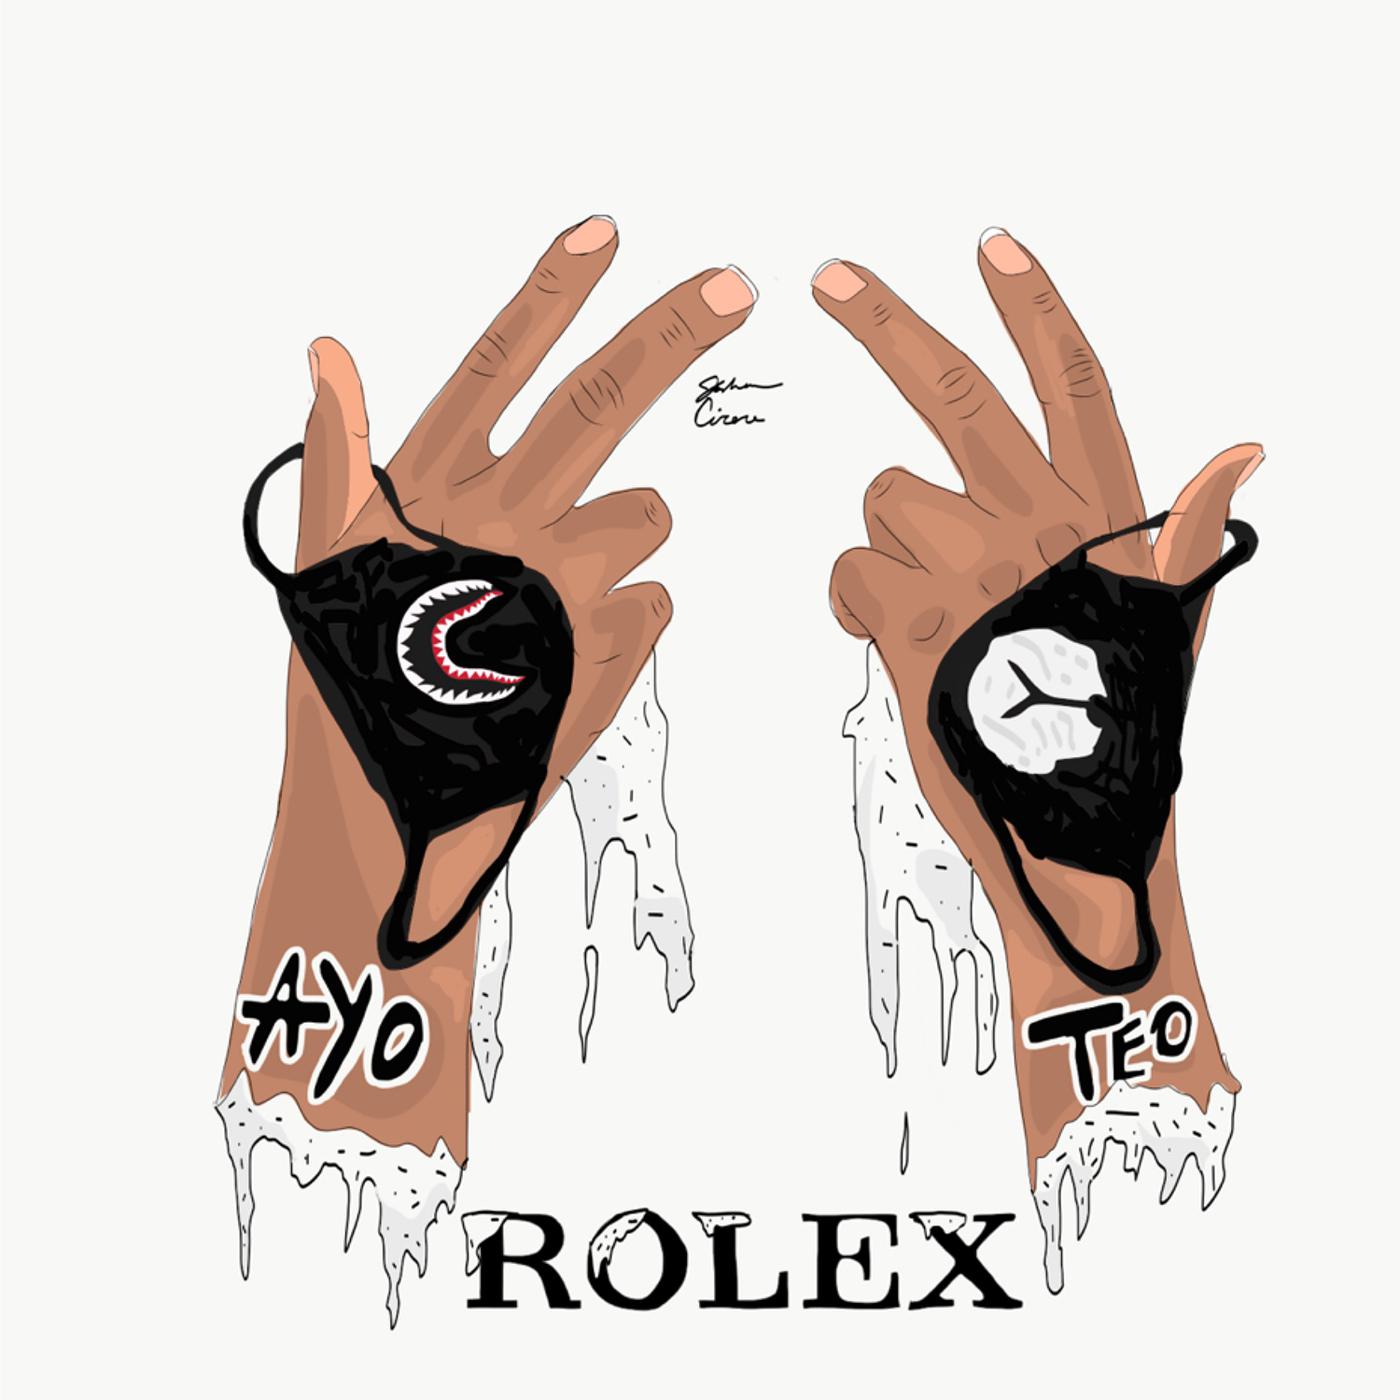 Rolex歌词 歌手Ayo & Teo-专辑Rolex-单曲《Rolex》LRC歌词下载